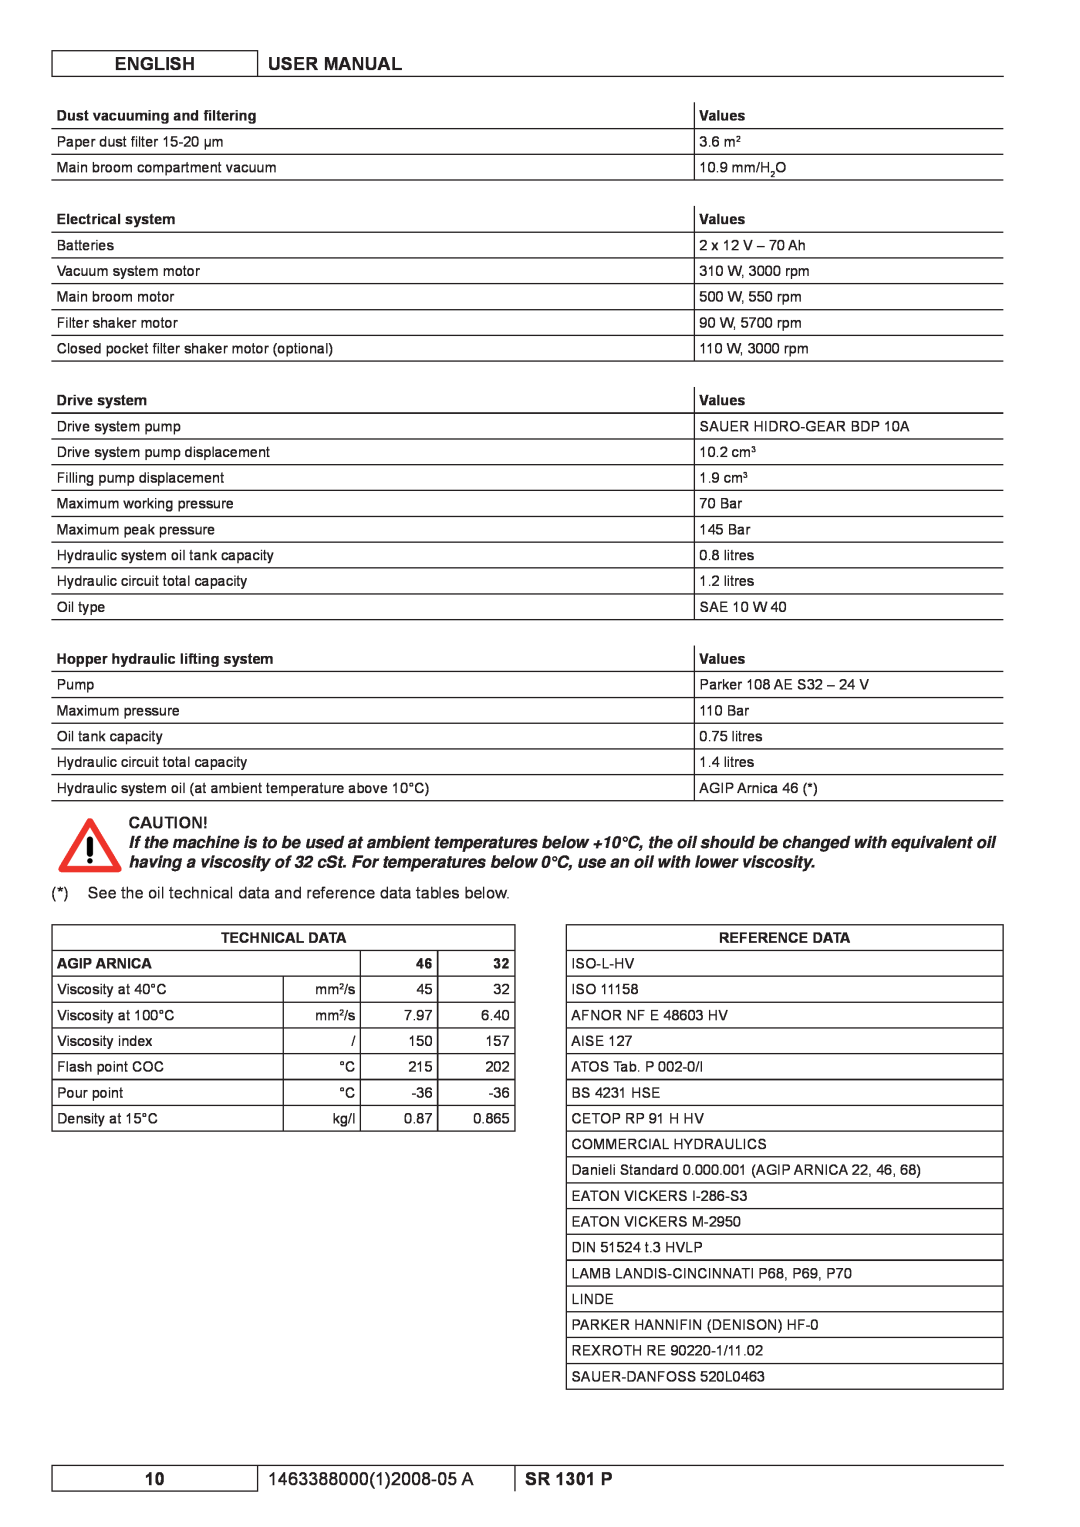 Nilfisk-ALTO SR 1301 P manuel dutilisation English, User Manual, 146338800012008-05 A 